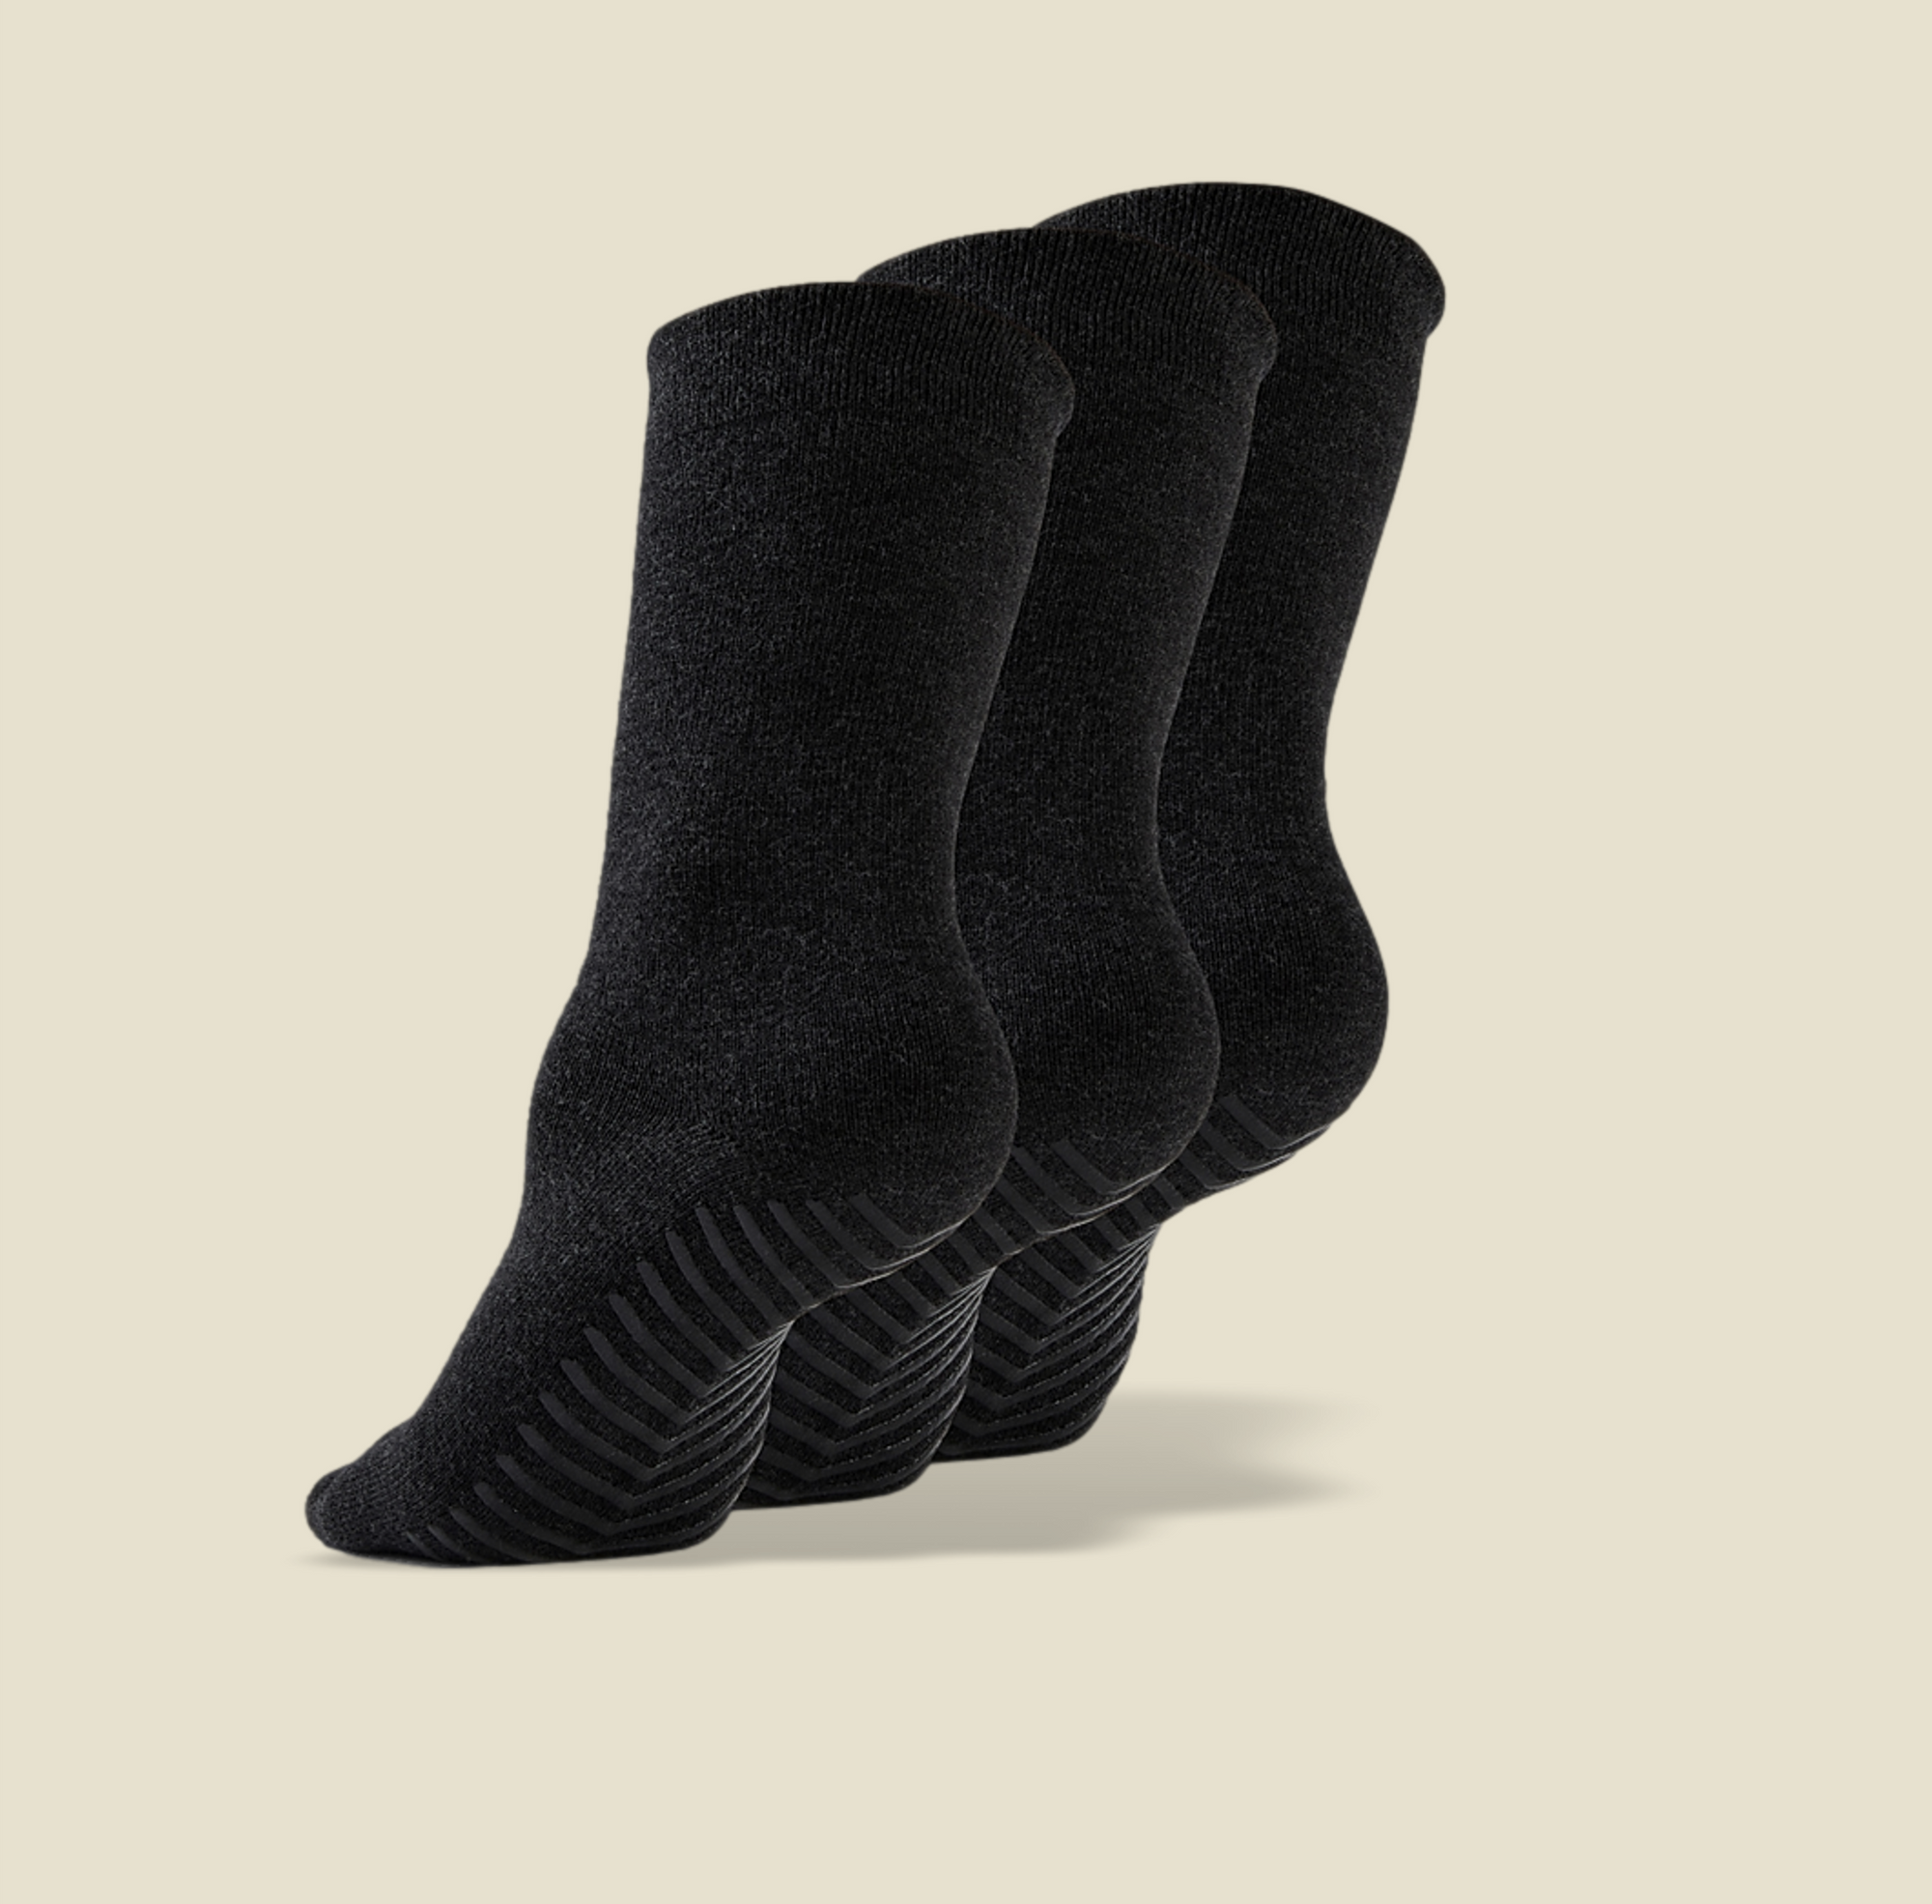 Men's Black Original Crew Non-Slip Socks - 3 pairs - Gripjoy Socks